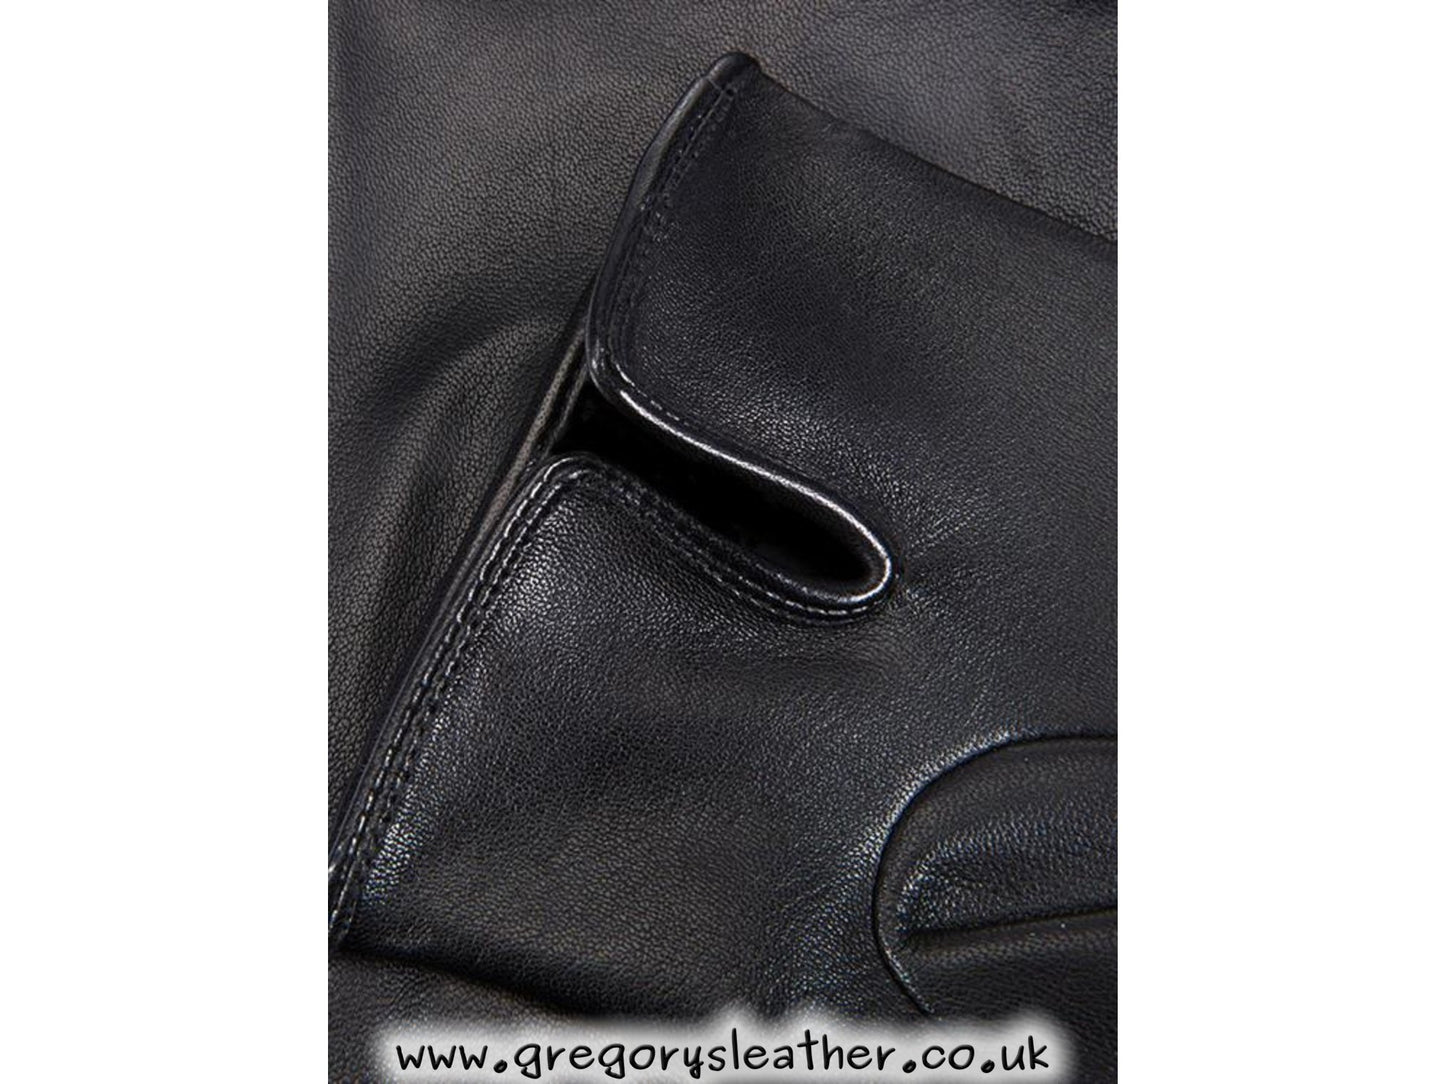 Black James Bond Leather Glove by Dents